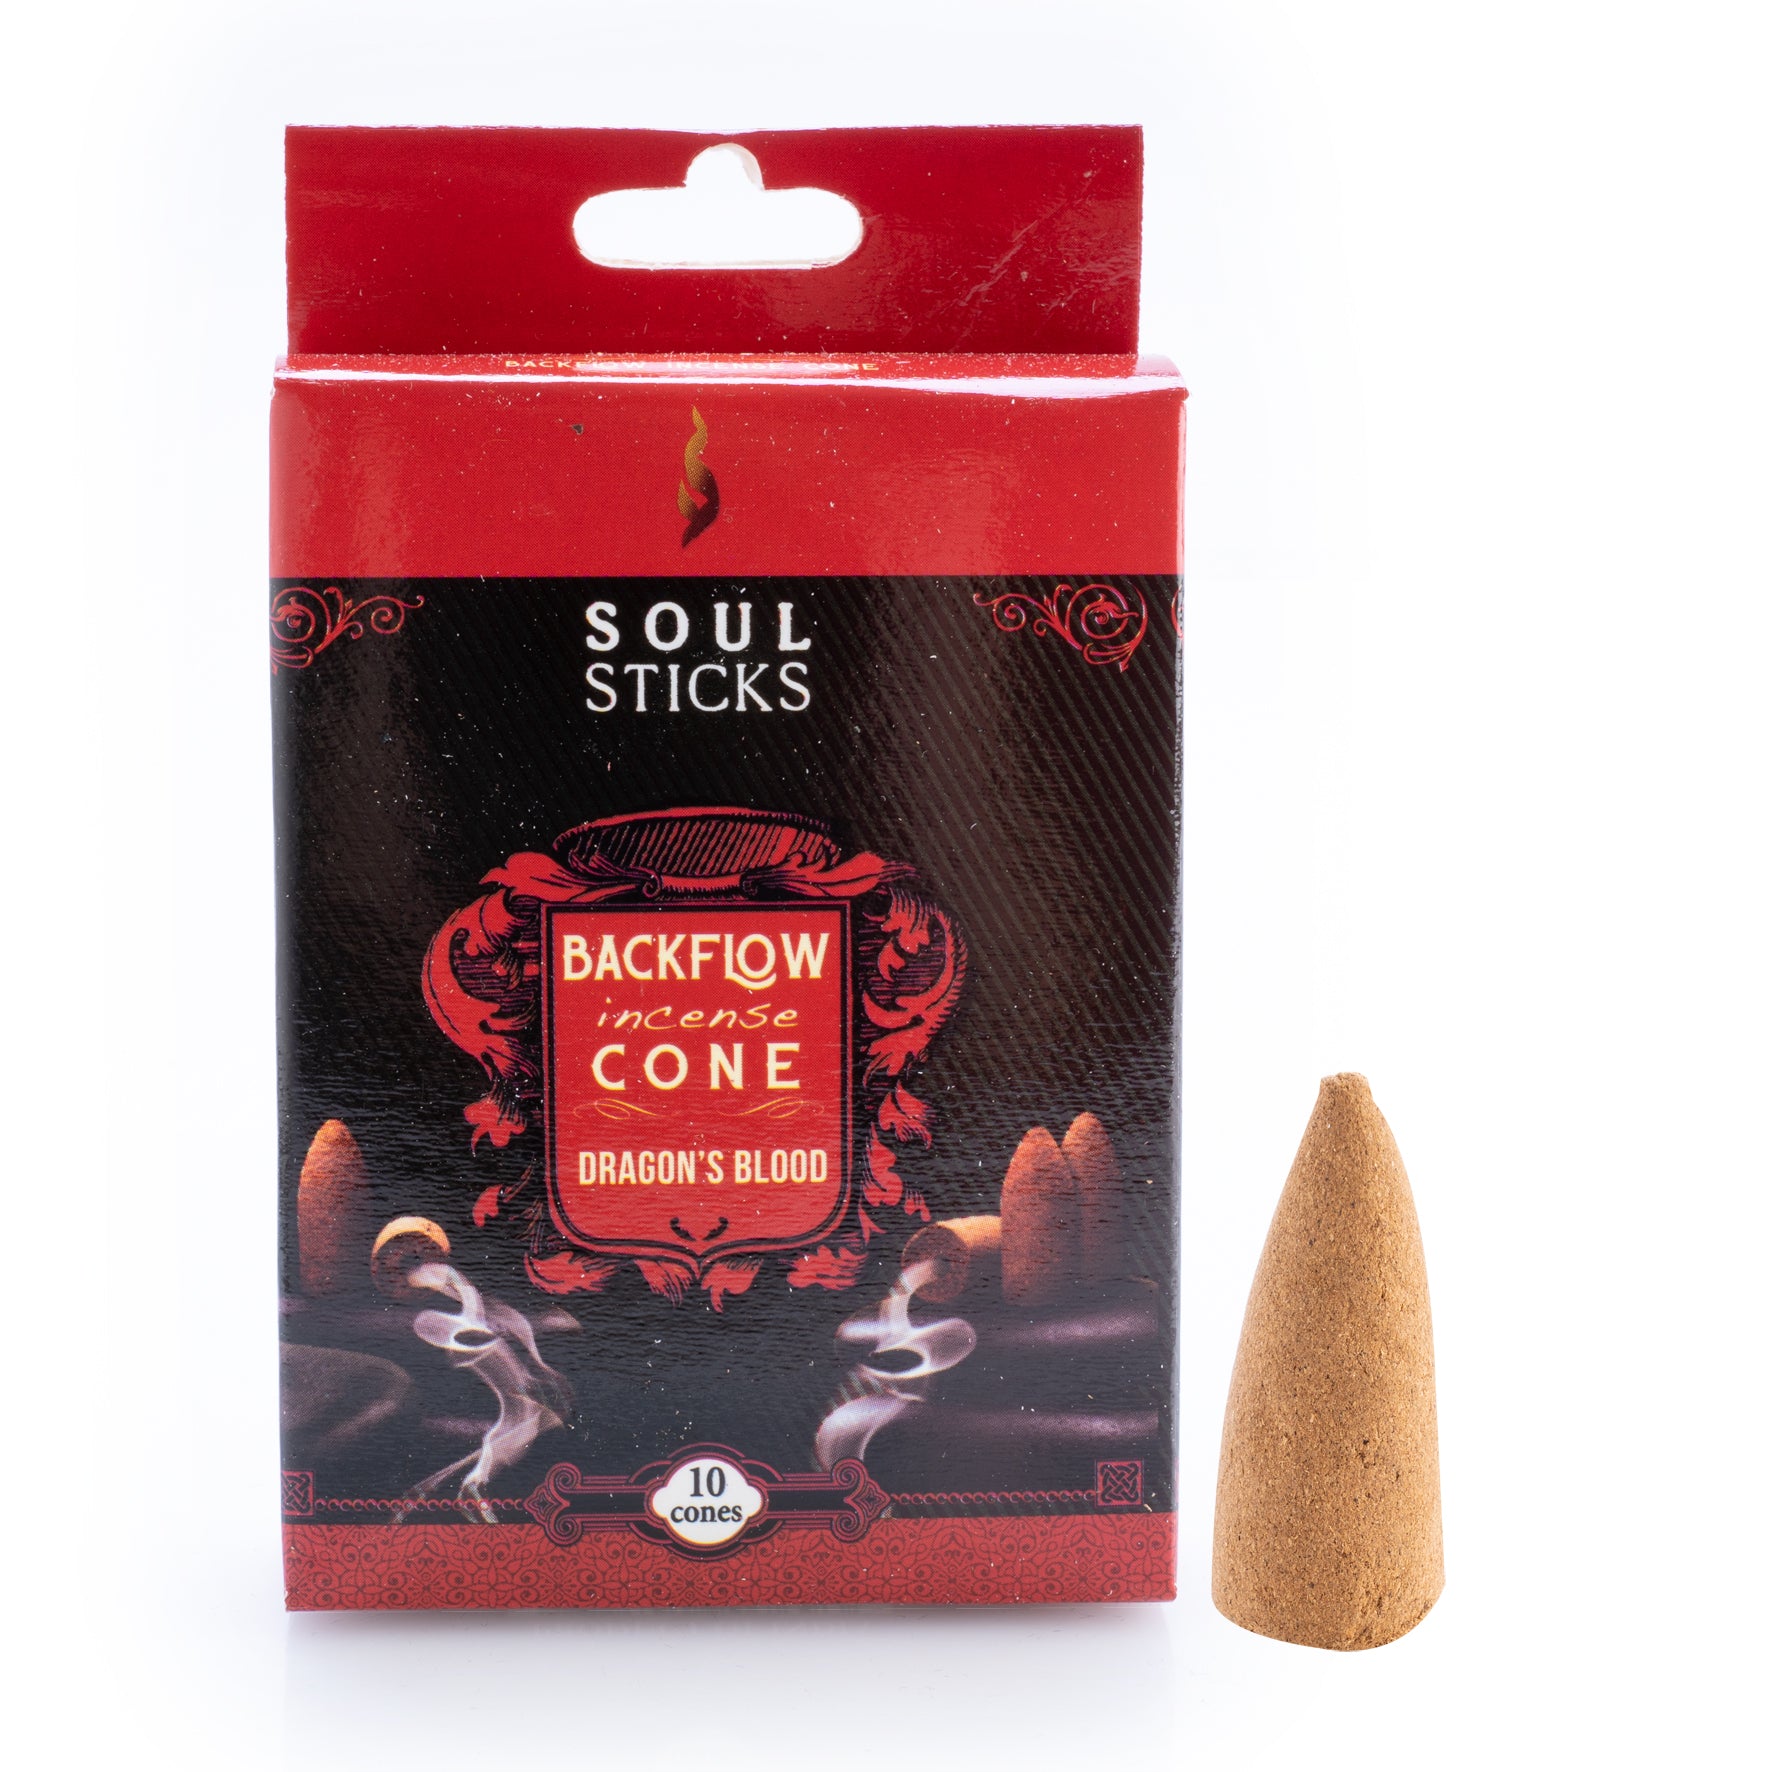 Soul Sticks Dragon’s Blood Backflow Incense Cone - Spirit & Stone